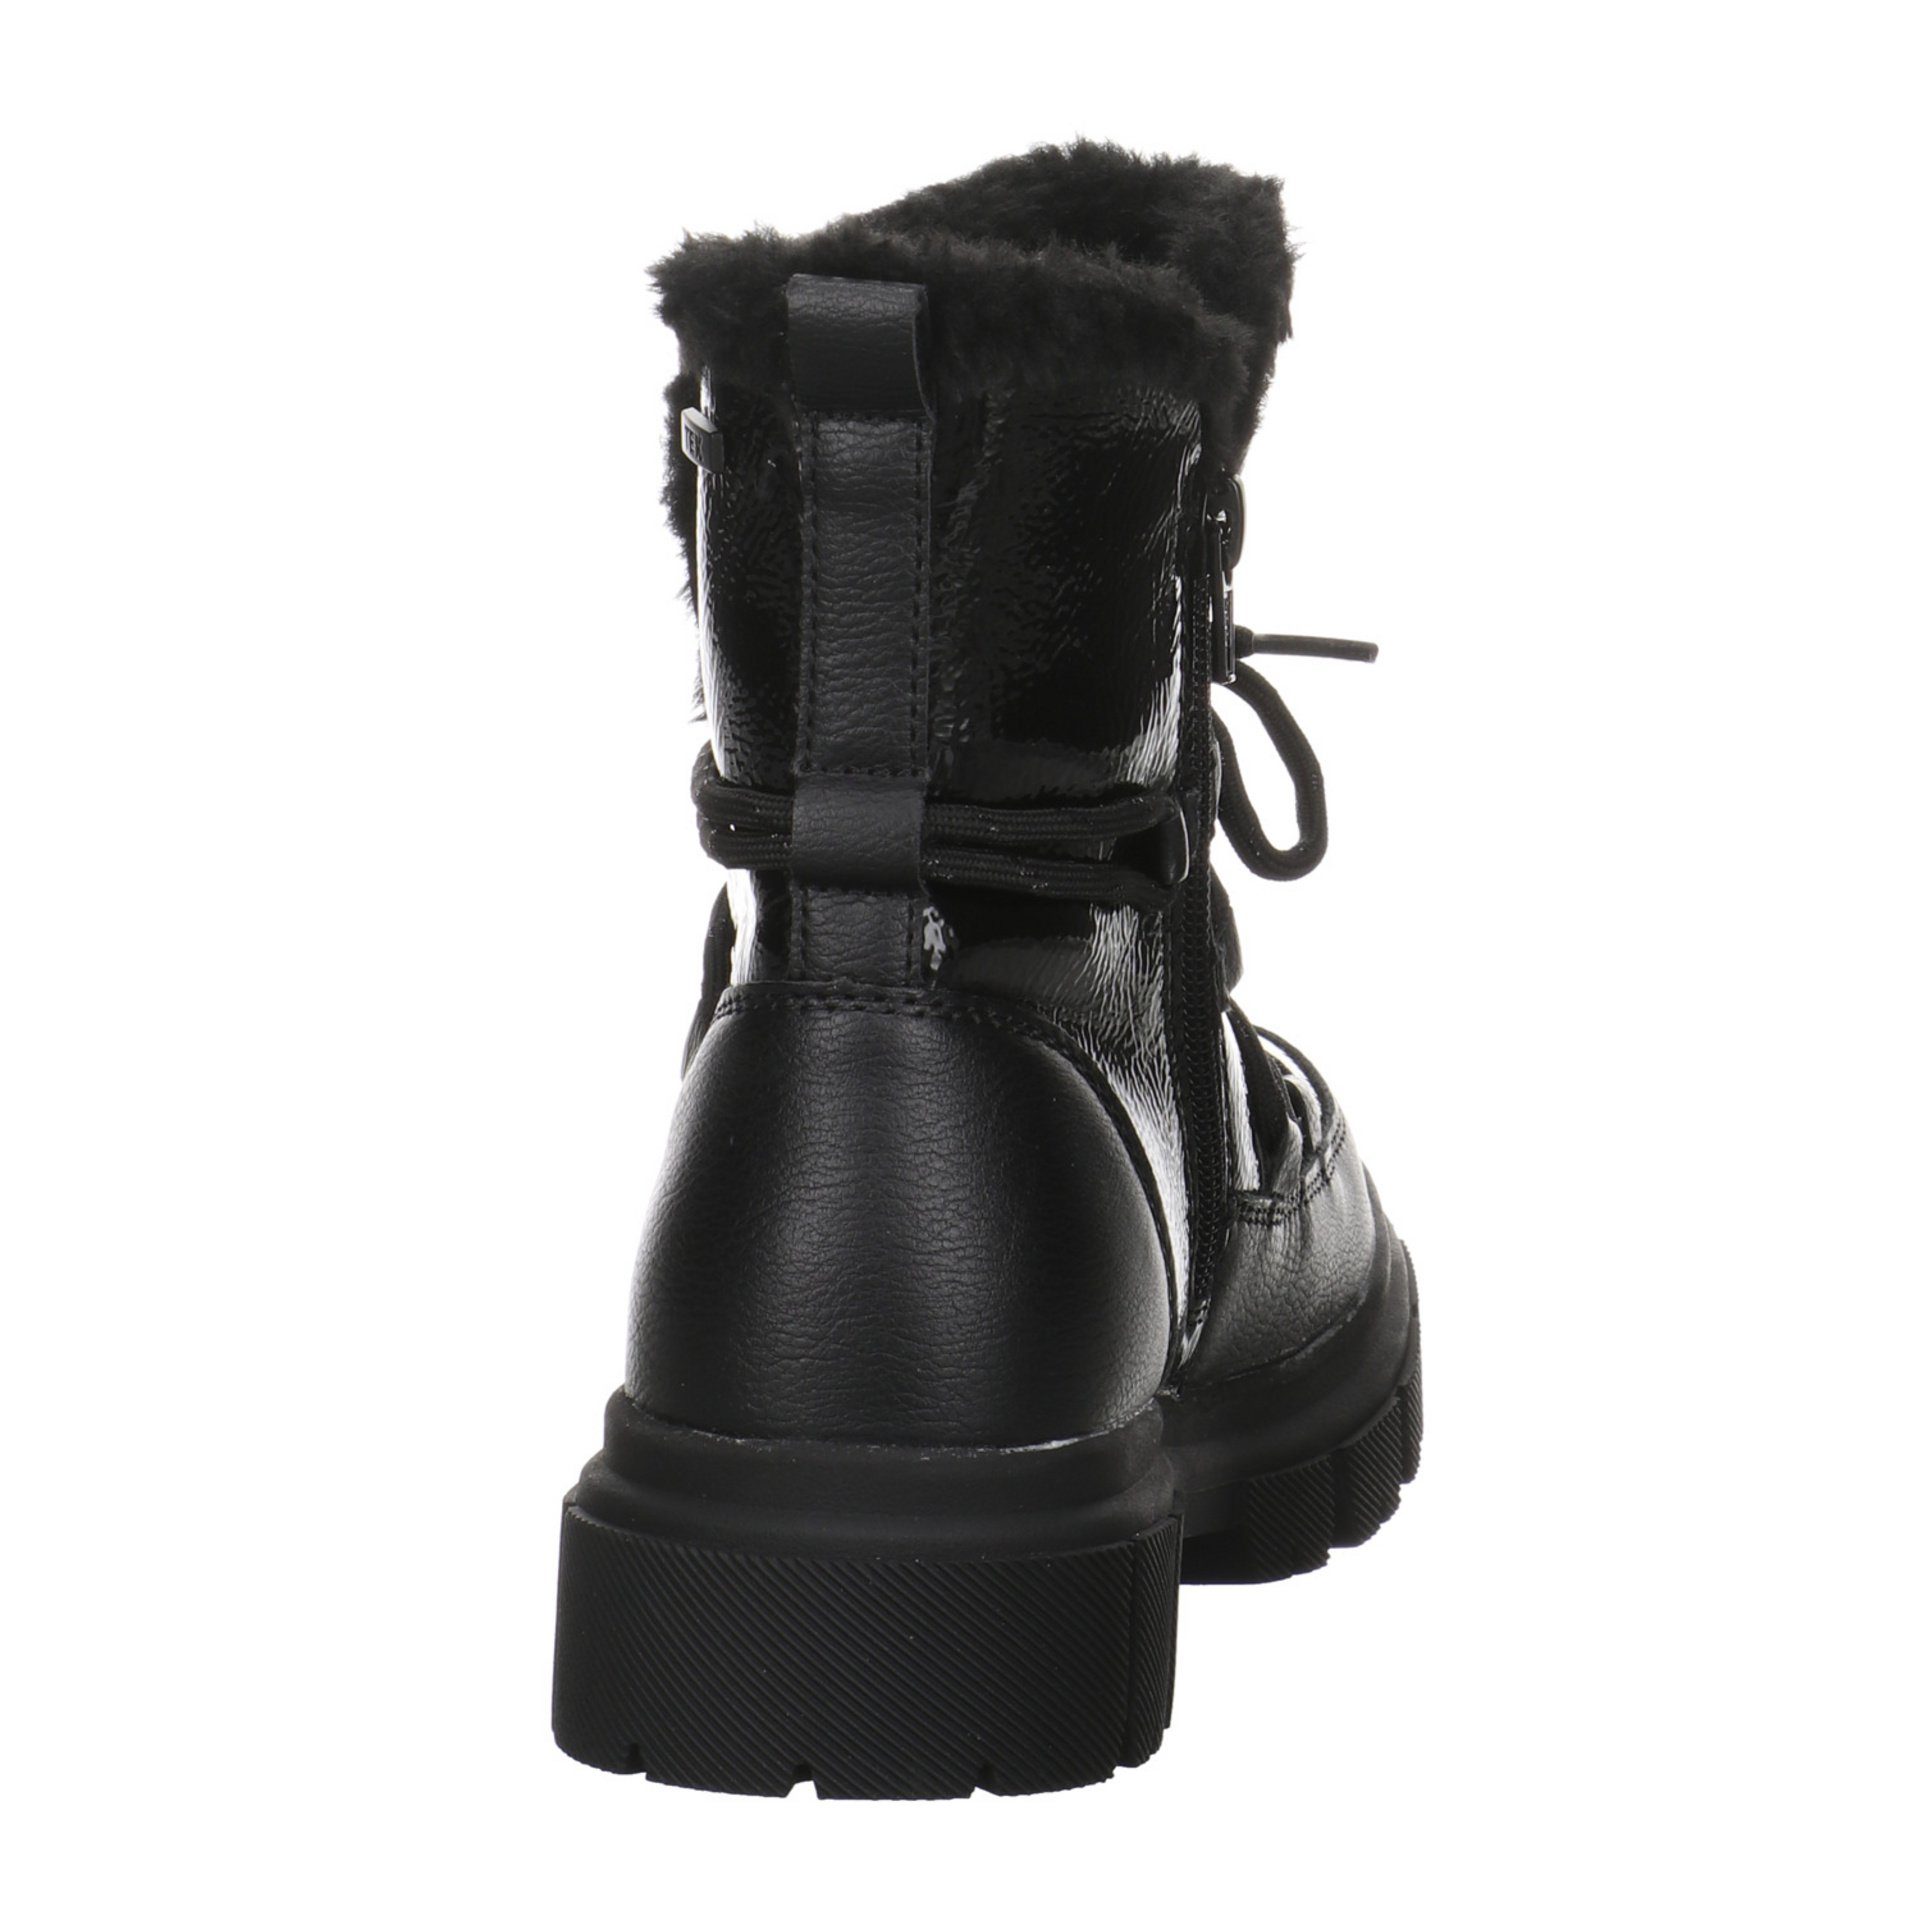 TOM TAILOR Mädchen Stiefel Kinderschuhe Schuhe Stiefelette black Synthetikkombination Boots